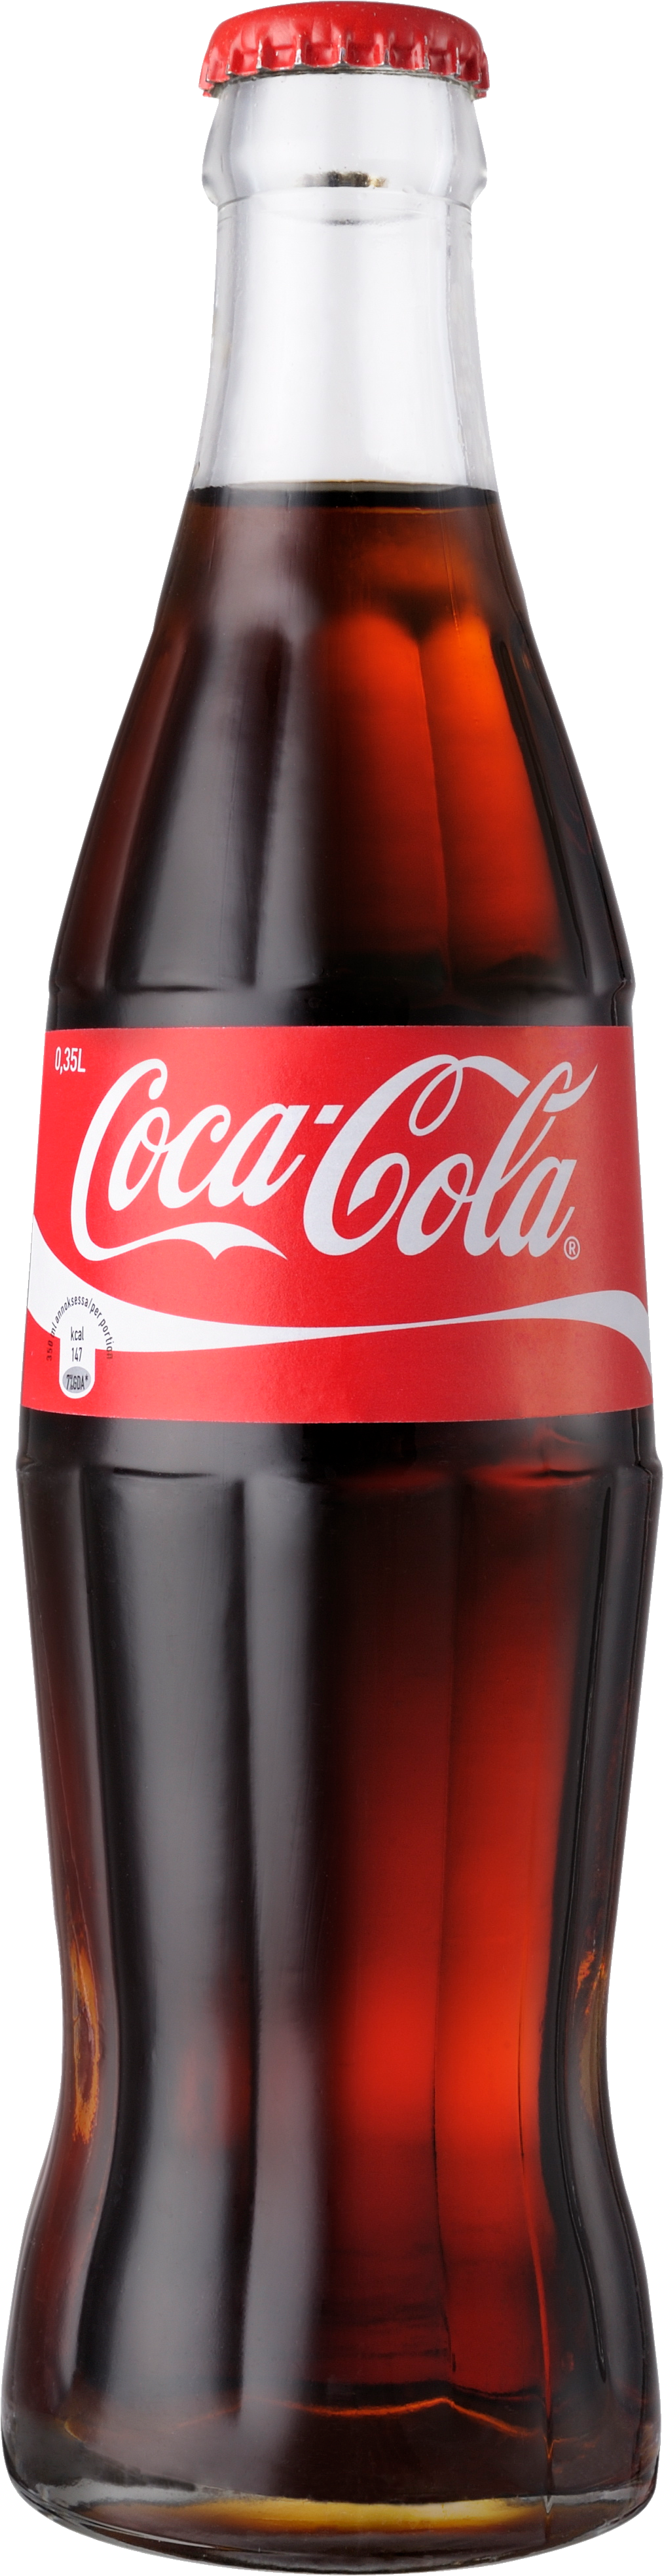 Coca Cola Png - Coca Cola Bottle Png Image, Transparent background PNG HD thumbnail